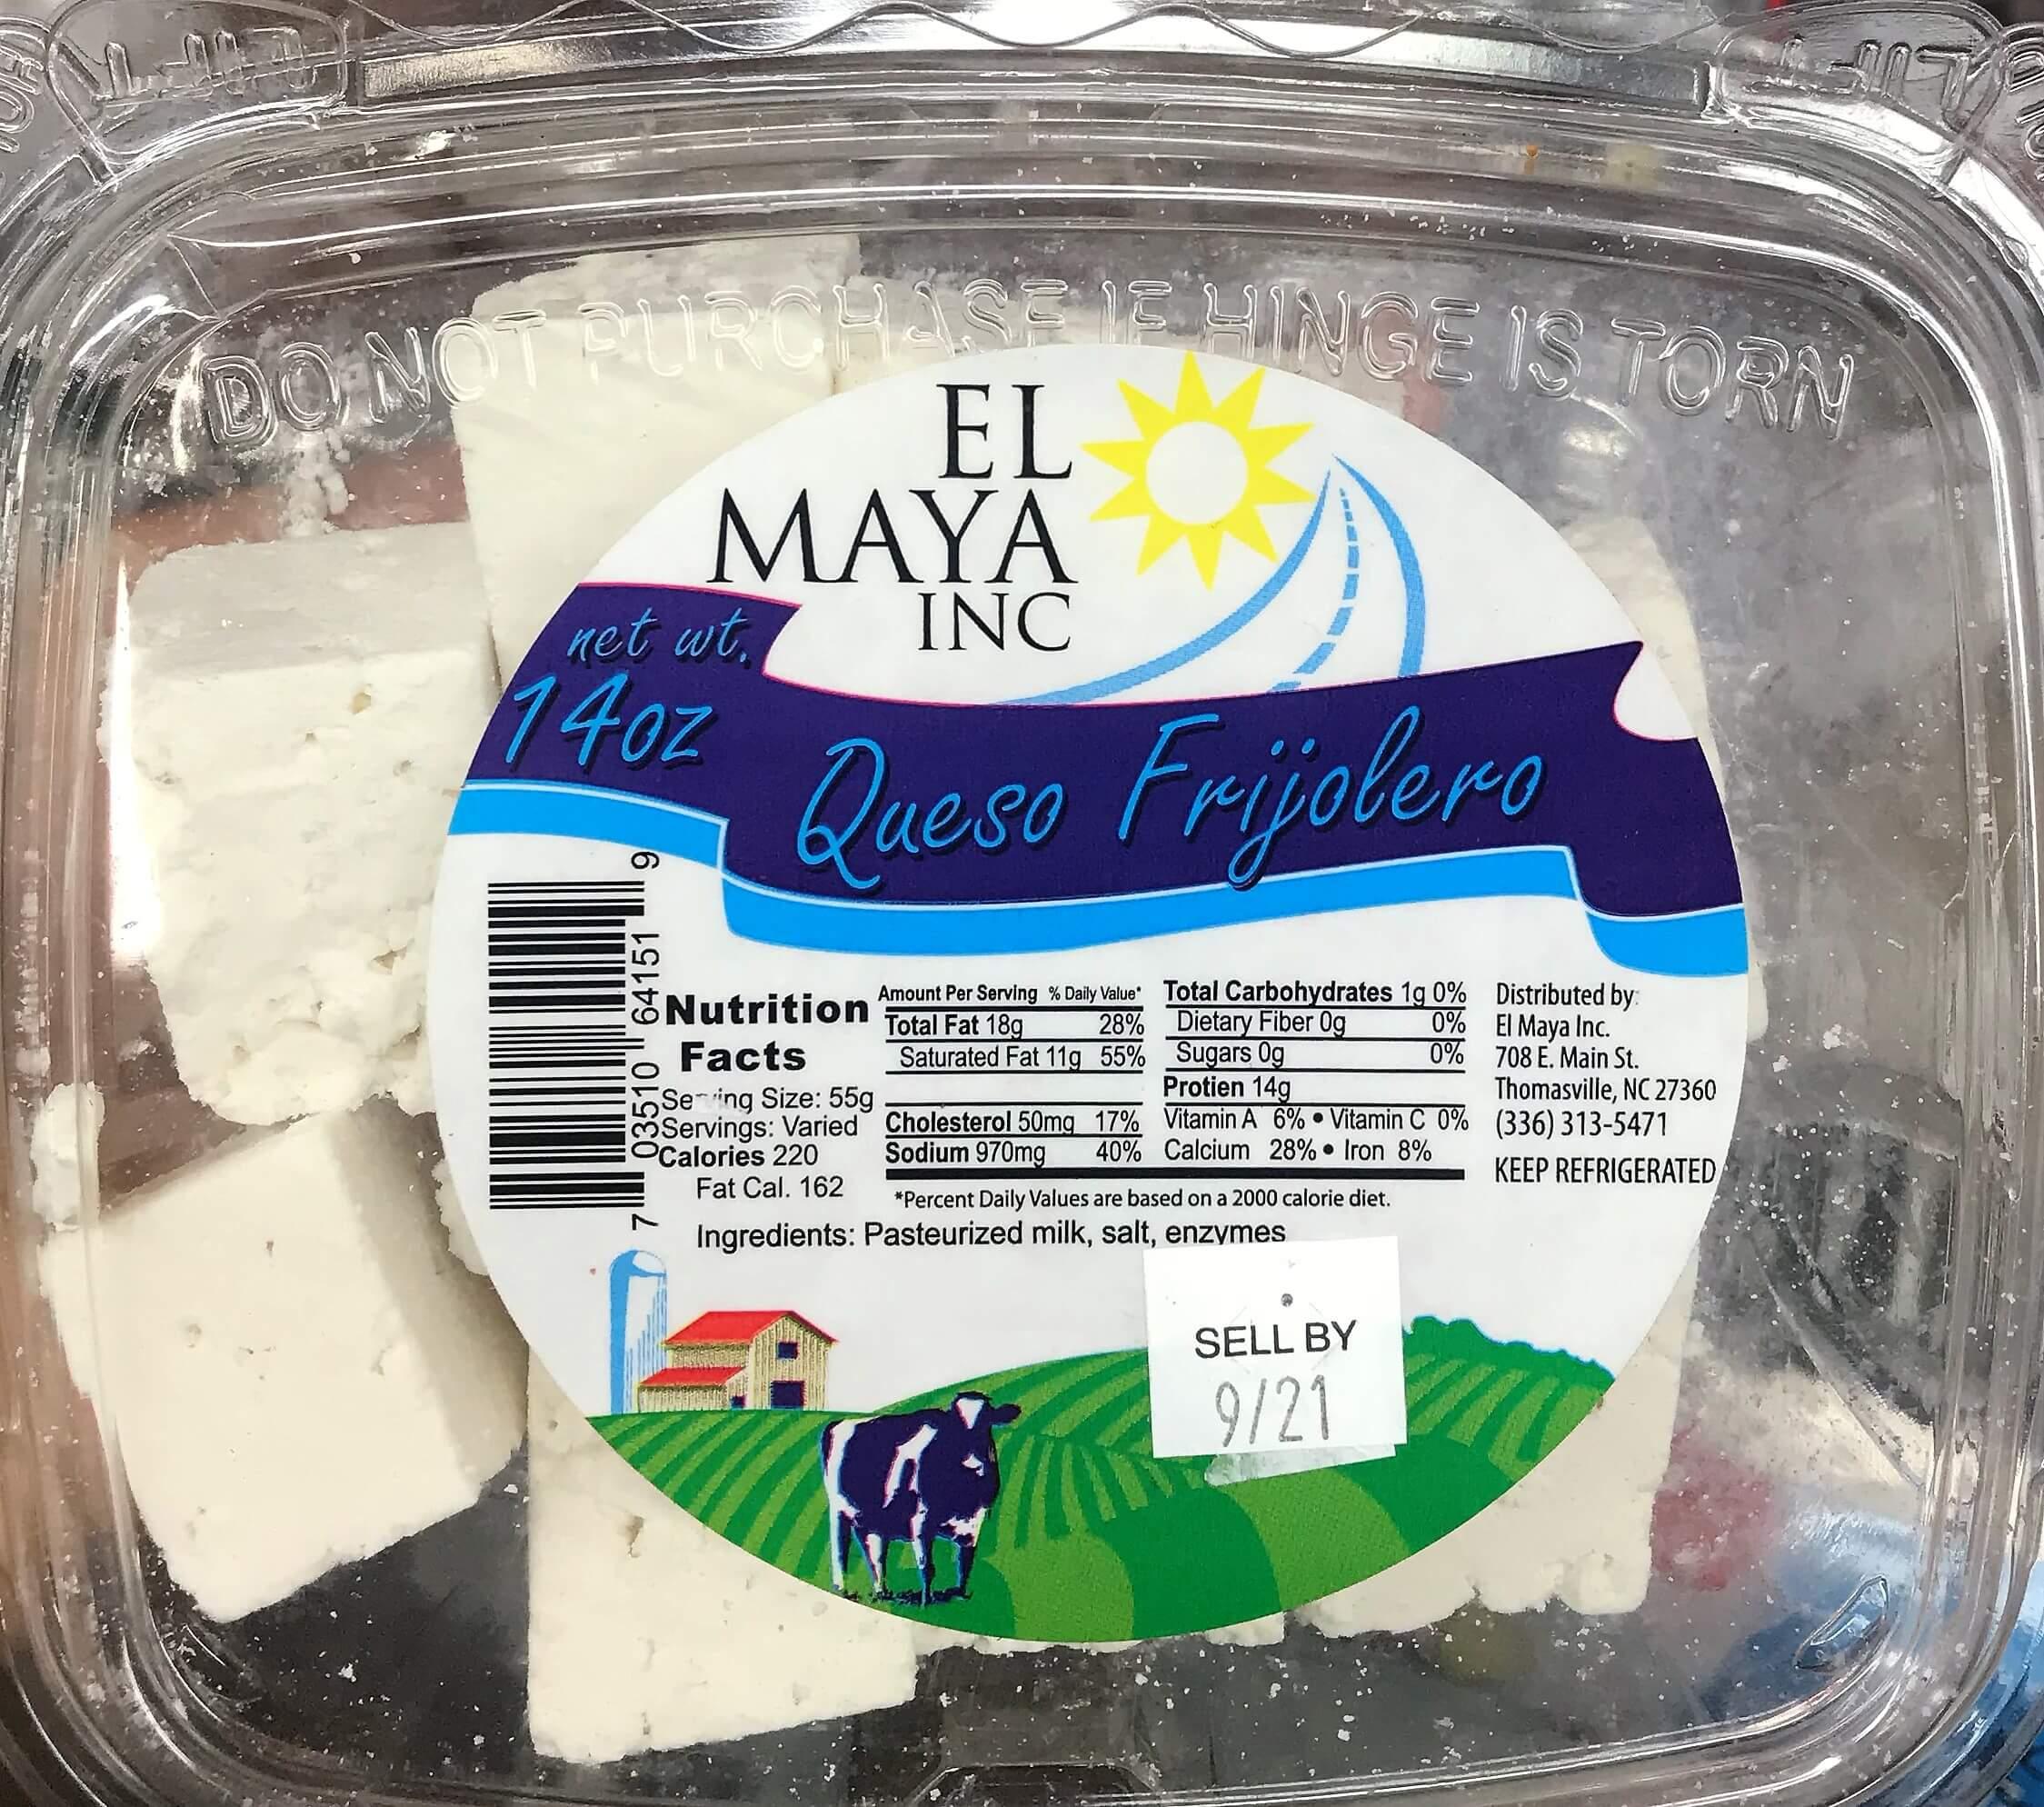 El Maya Inc - Frijolero Cheese 14oz.